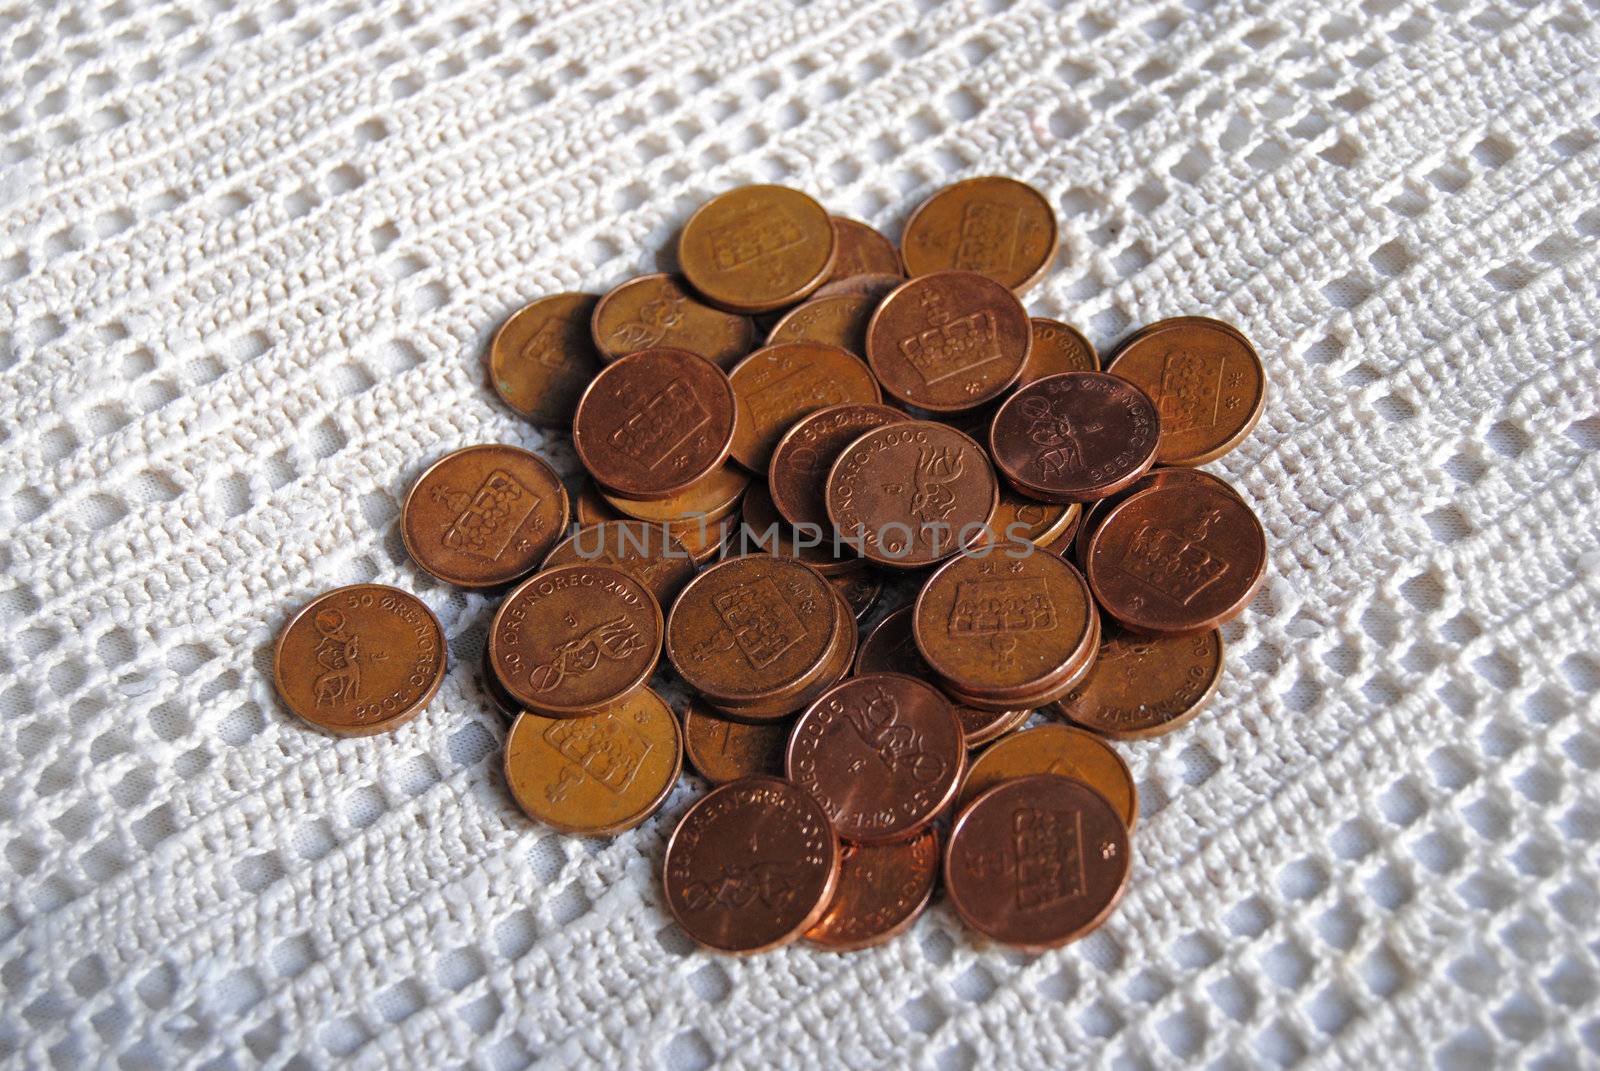 50 øre coins by viviolsen